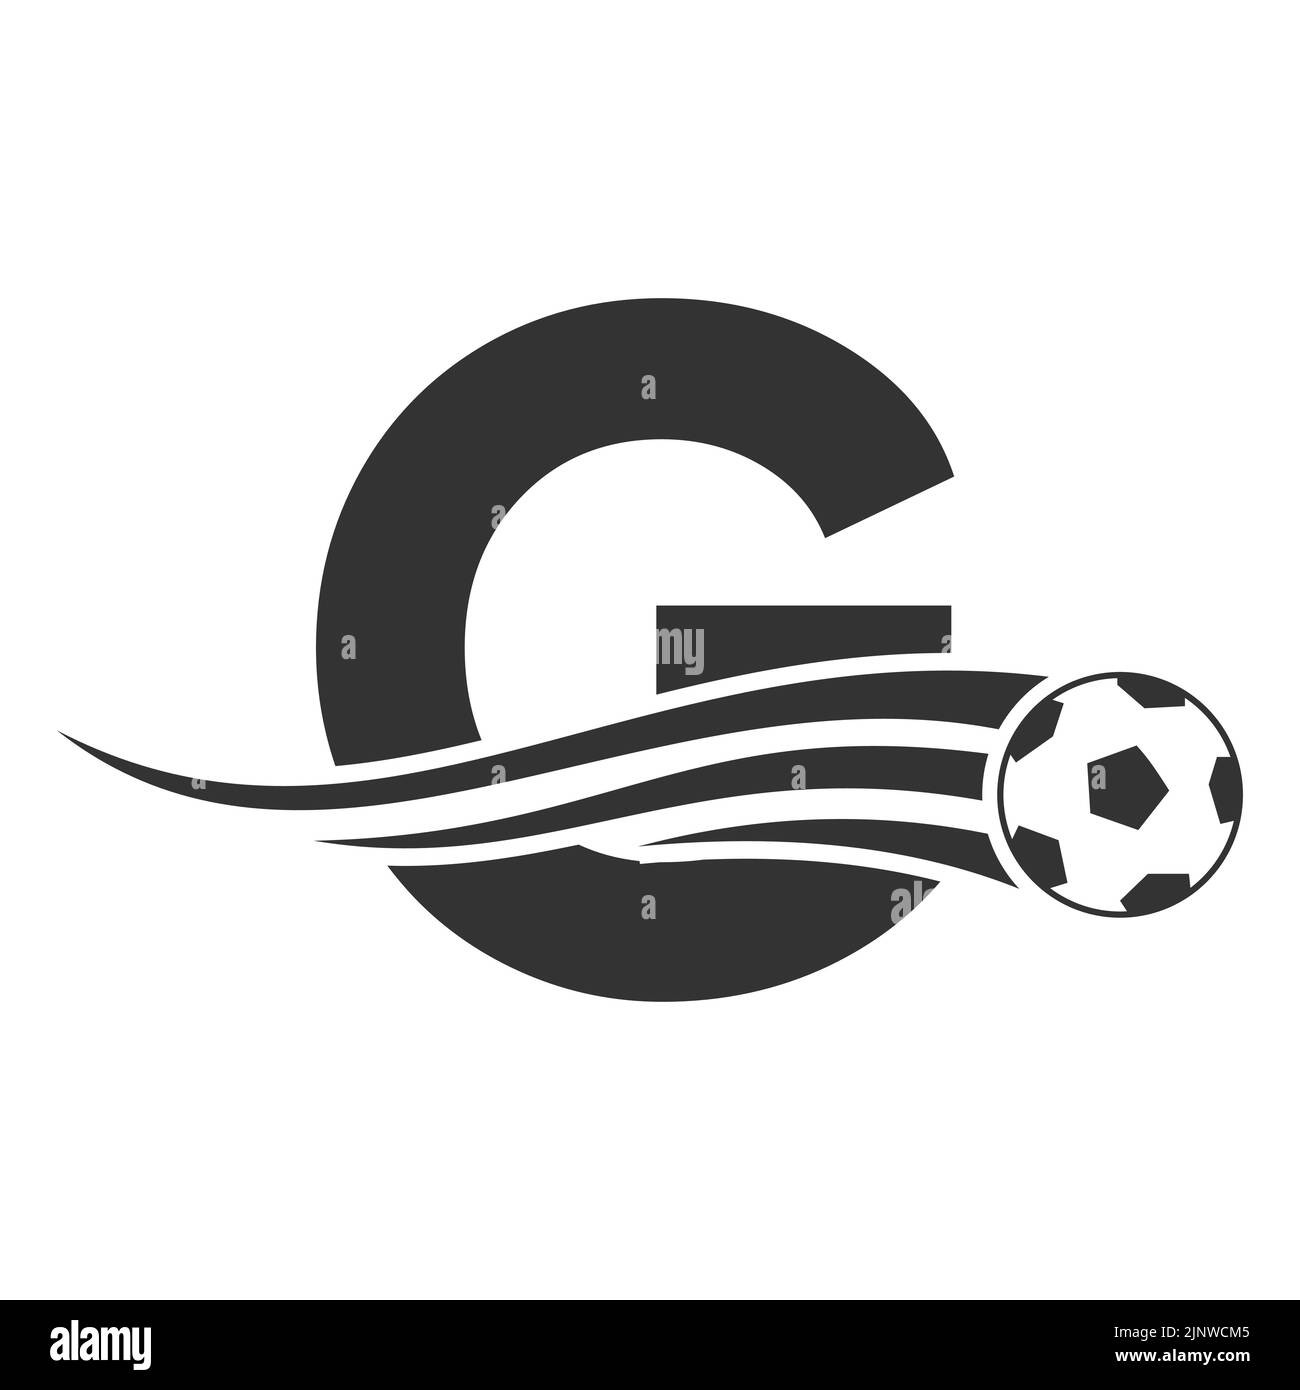 Soccer Football Logo On Letter G Sign. Soccer Club Emblem Concept Of Football Team Icon Stock Vector